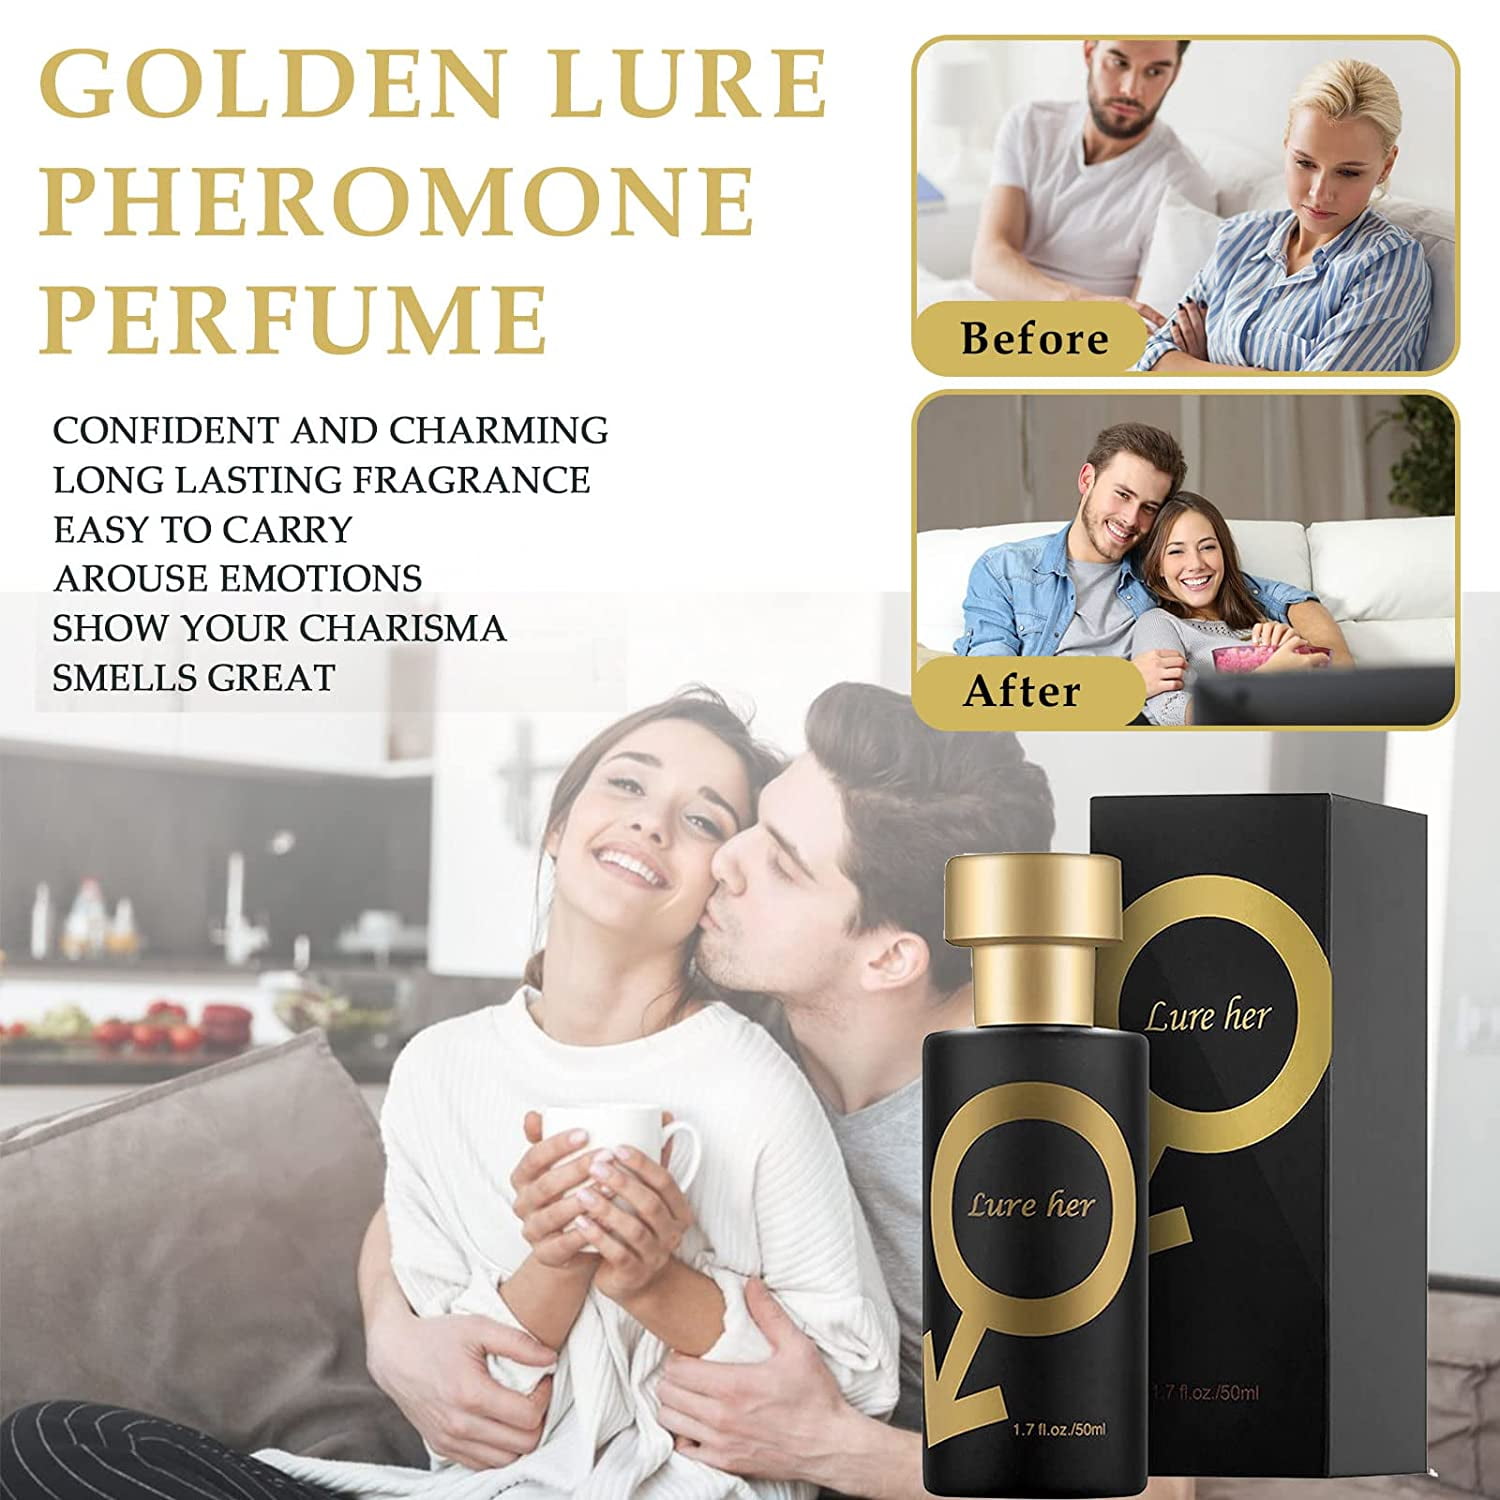 Pheromone Perfume Golden Lure, Luring Her Perfume, Pheromone